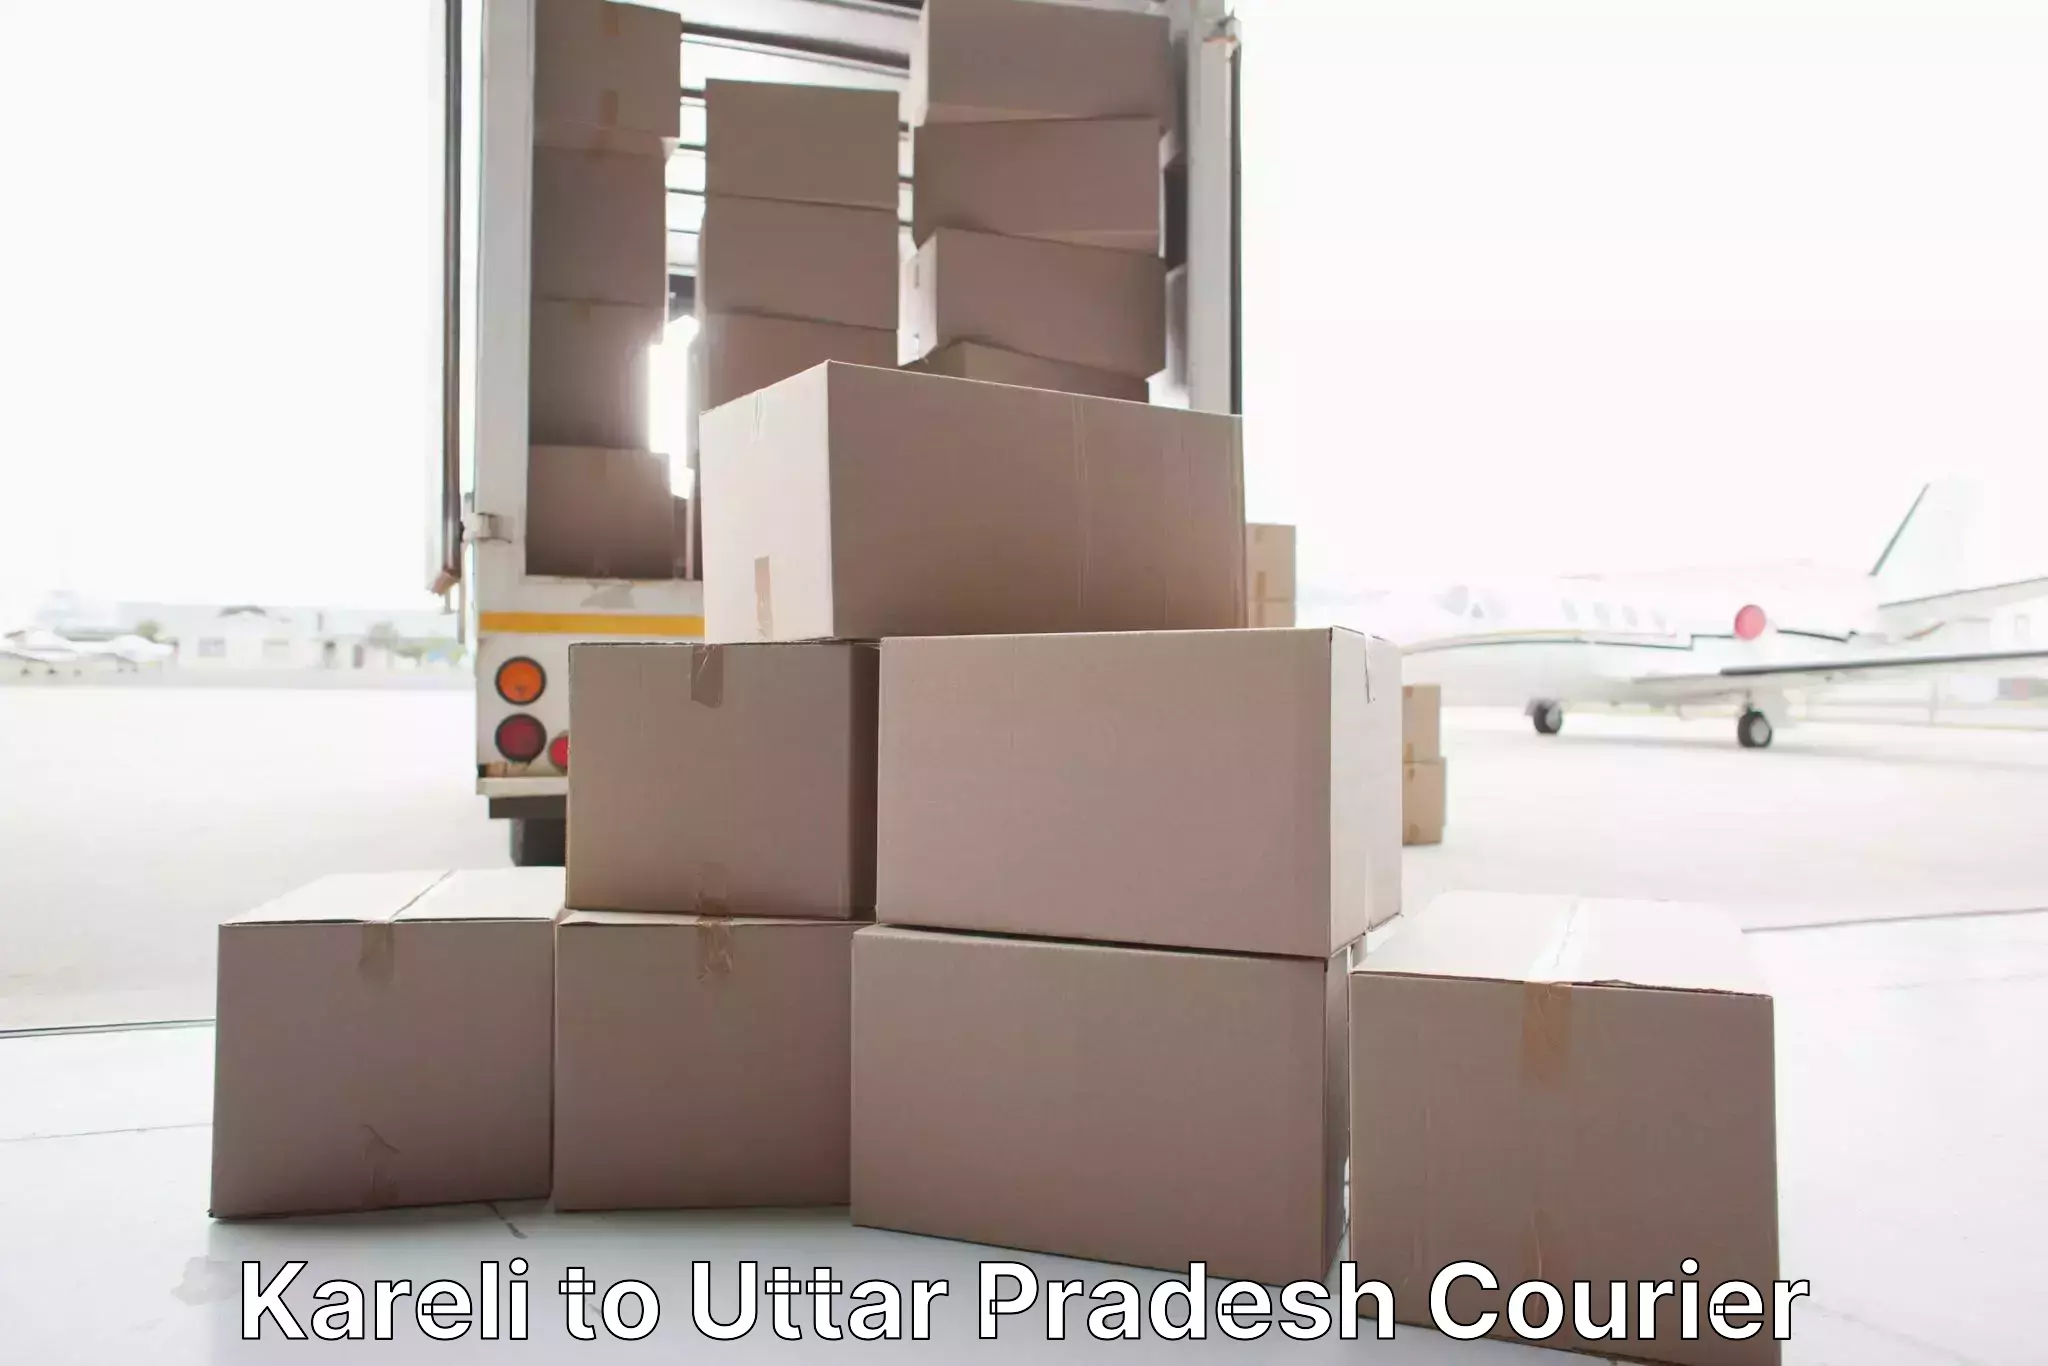 Home shifting experts Kareli to Uttar Pradesh